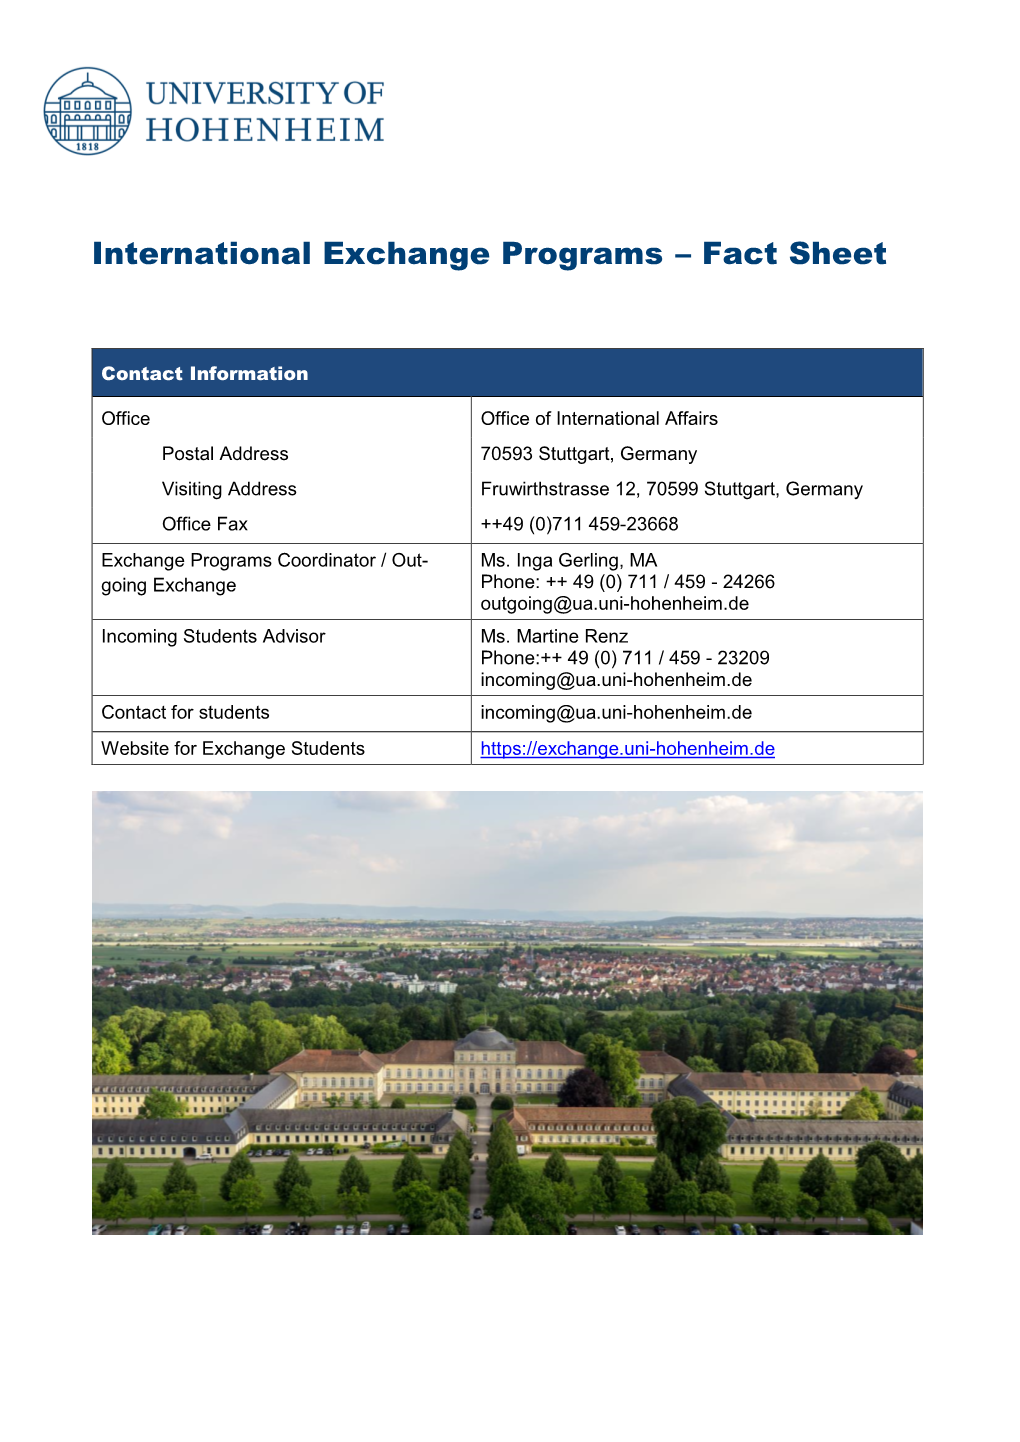 Hohenheim University Fact Sheet